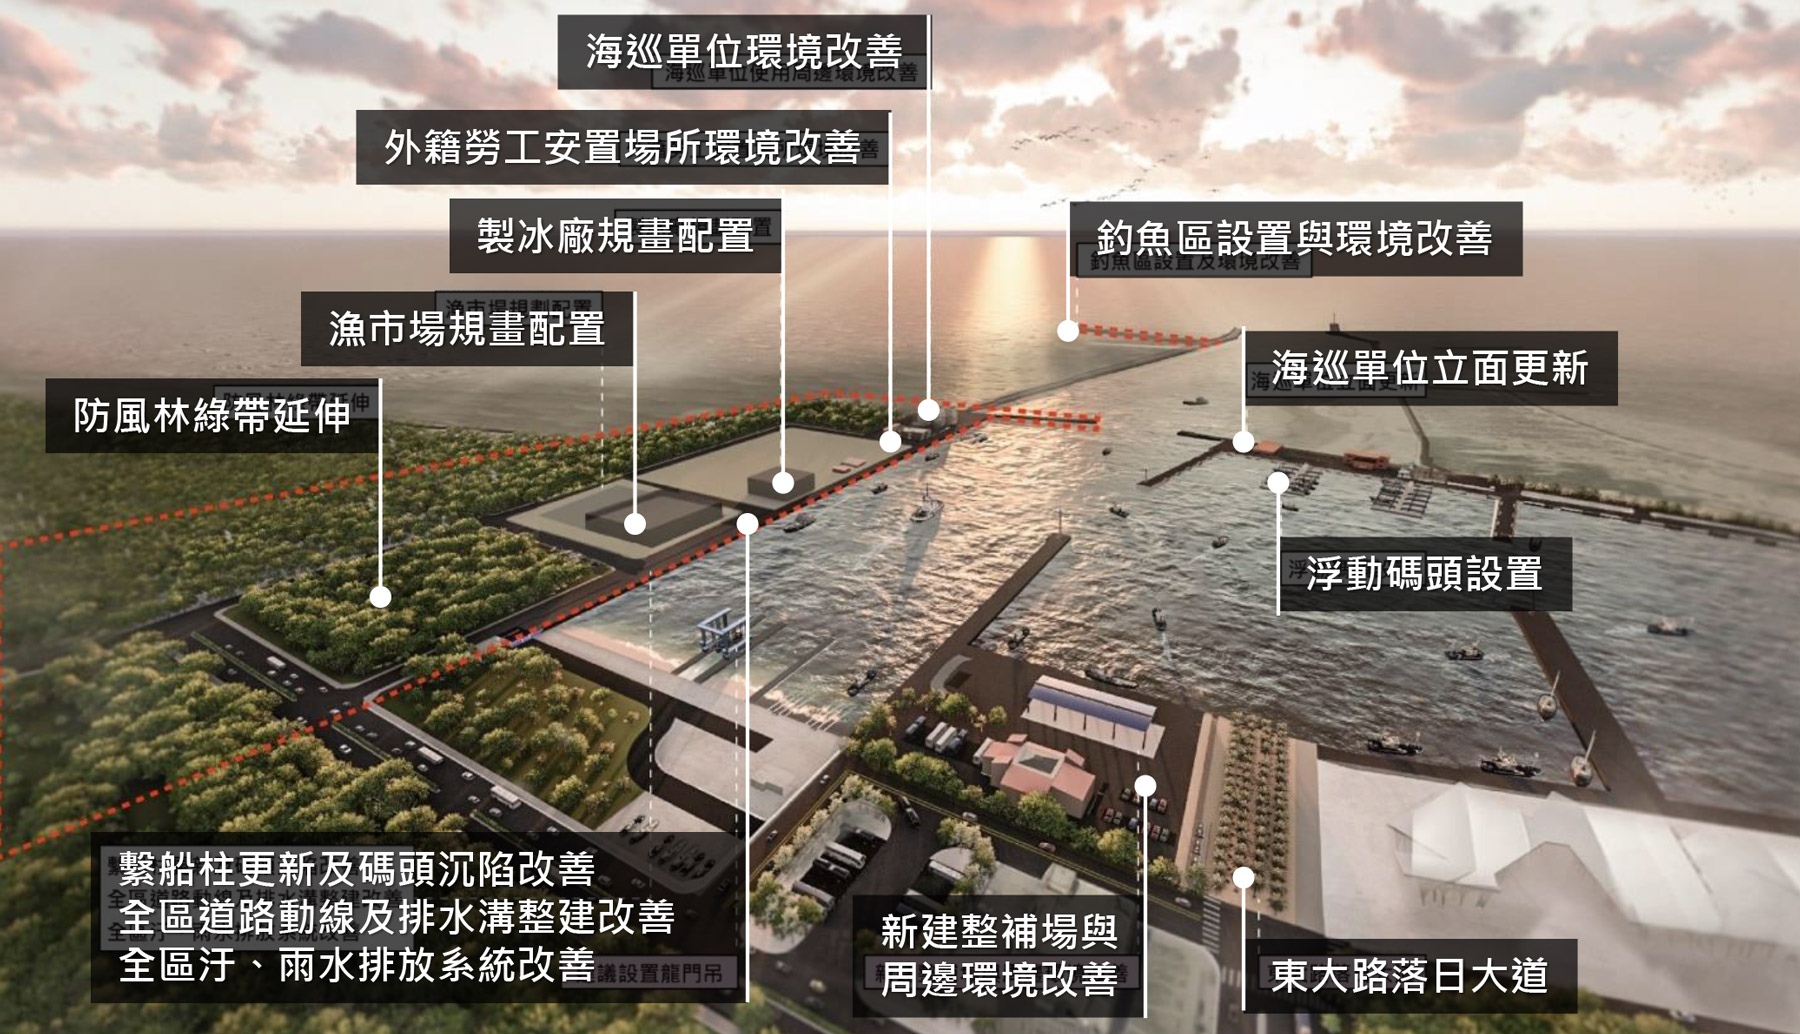 B3-2 新竹漁港周邊海岸環境改善工程 (設計+工程)